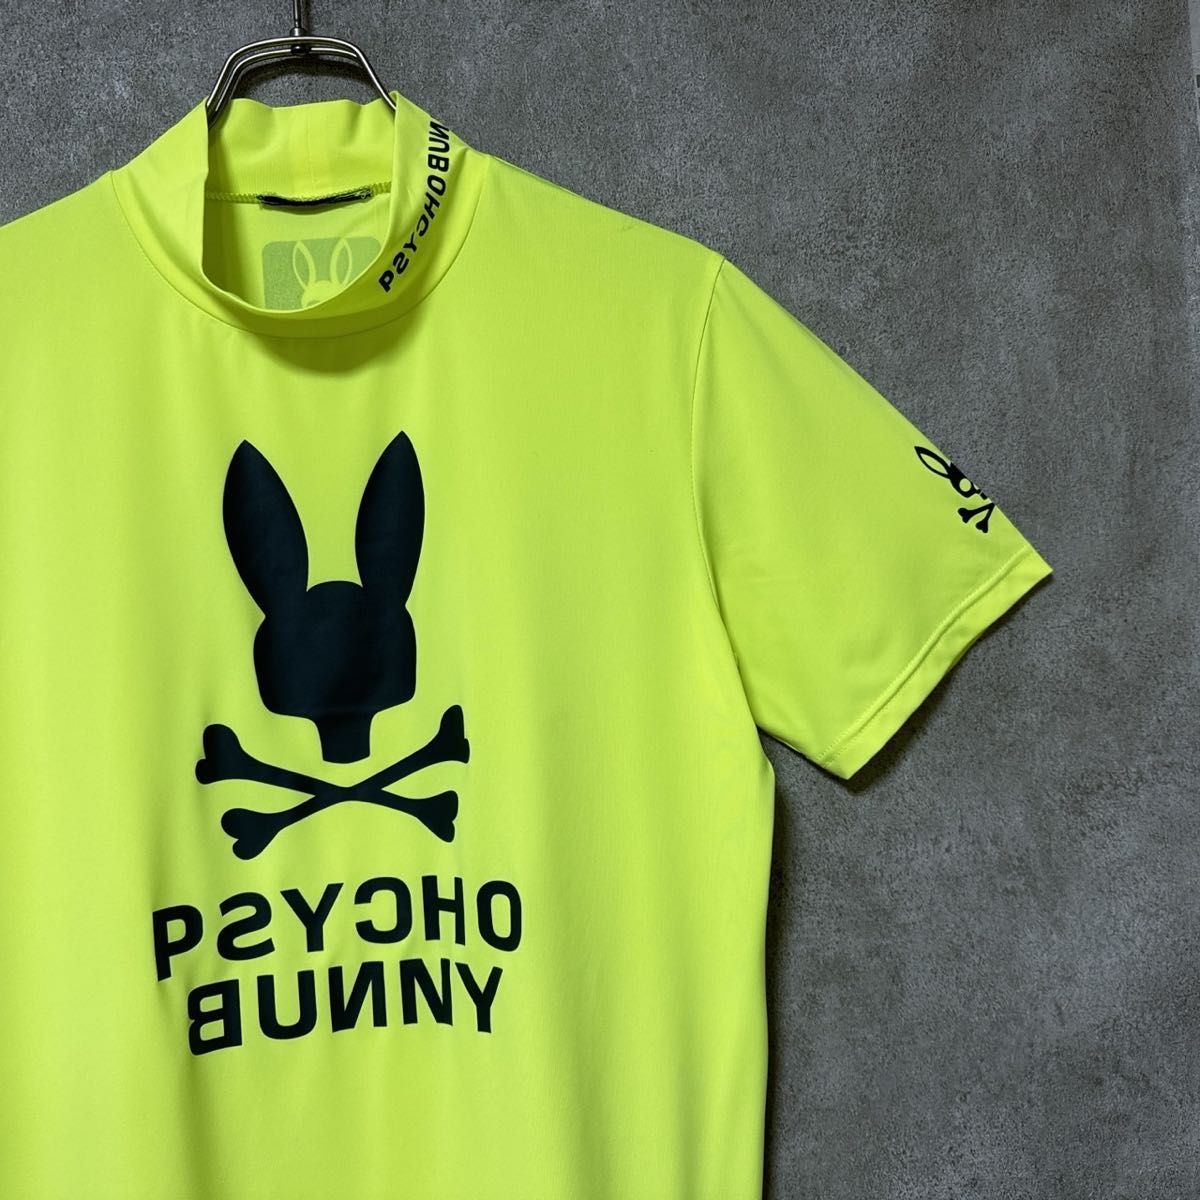 Psycho Bunny サイコバニー 半袖 モックネック シャツ ゴルフウェア メンズ スポーツ デザイン 